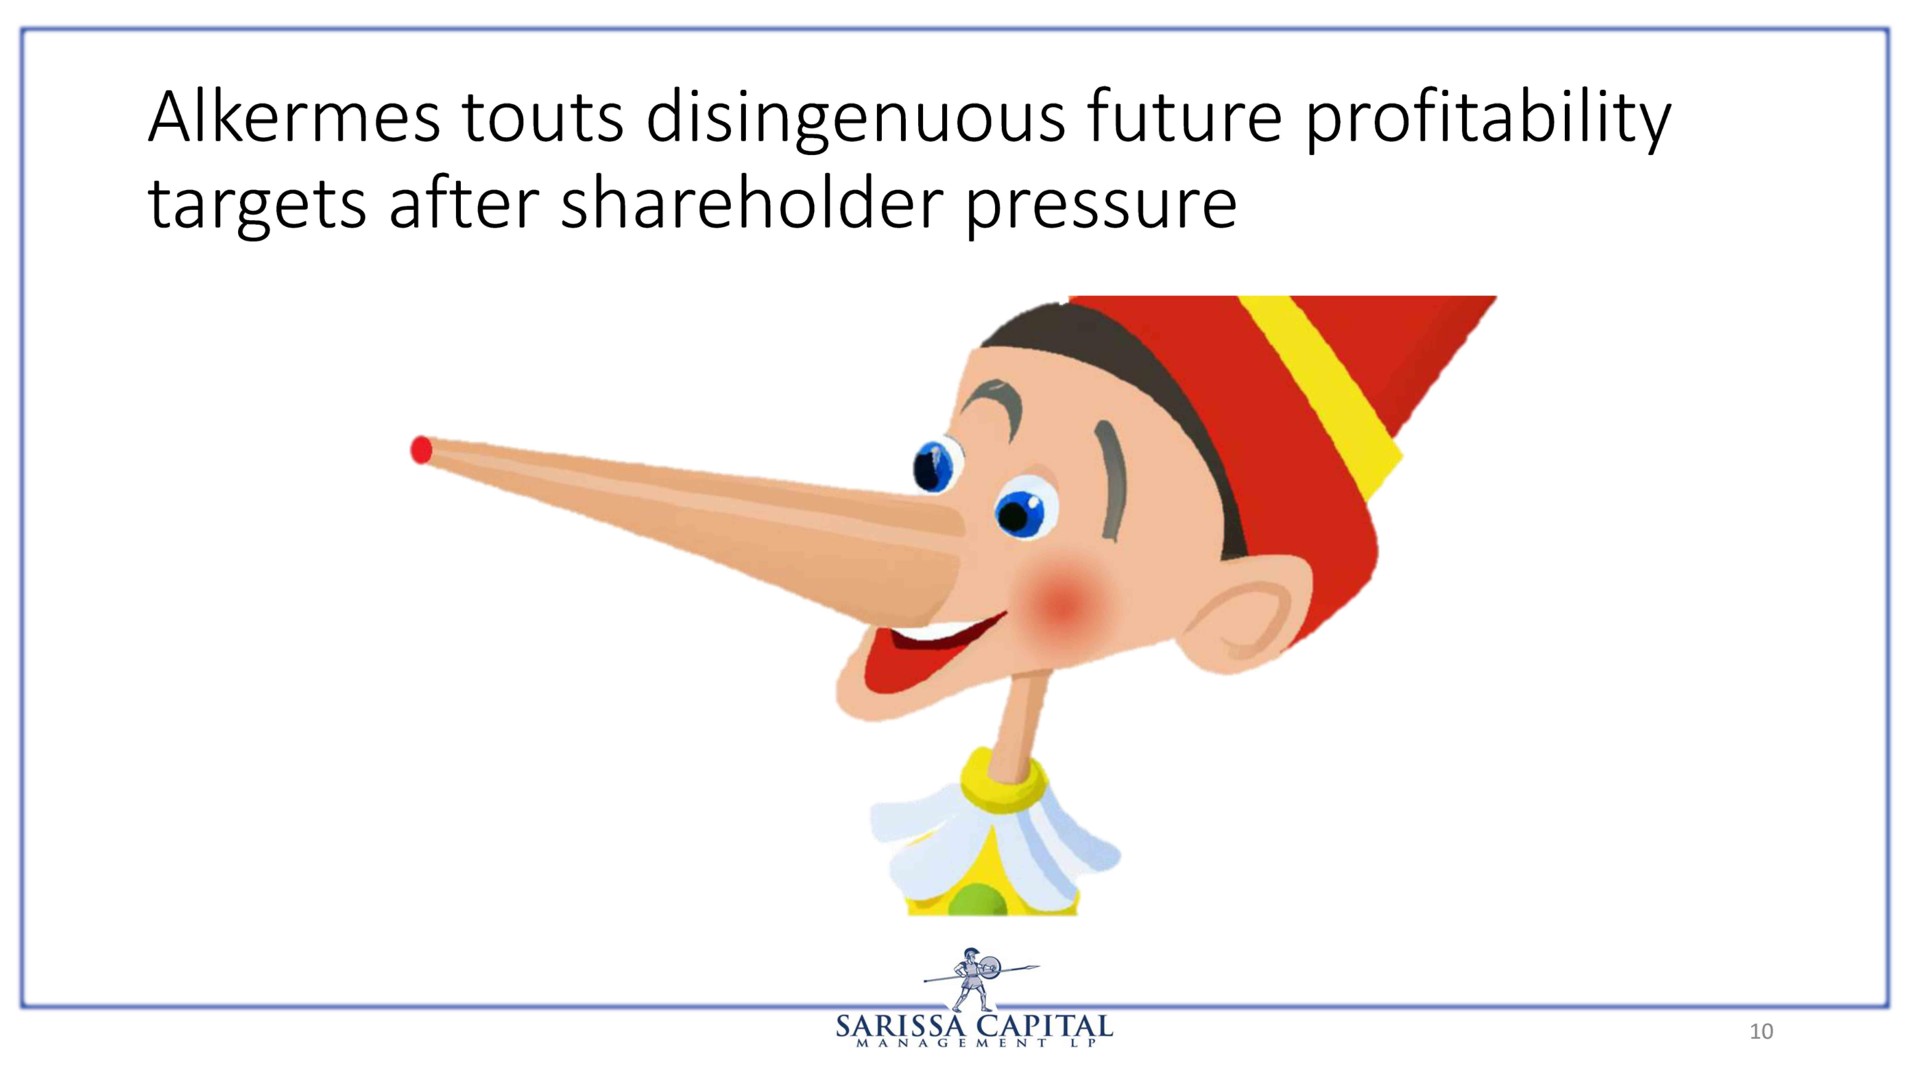 alkermes touts disingenuous future profitability targets after shareholder pressure | Sarissa Capital